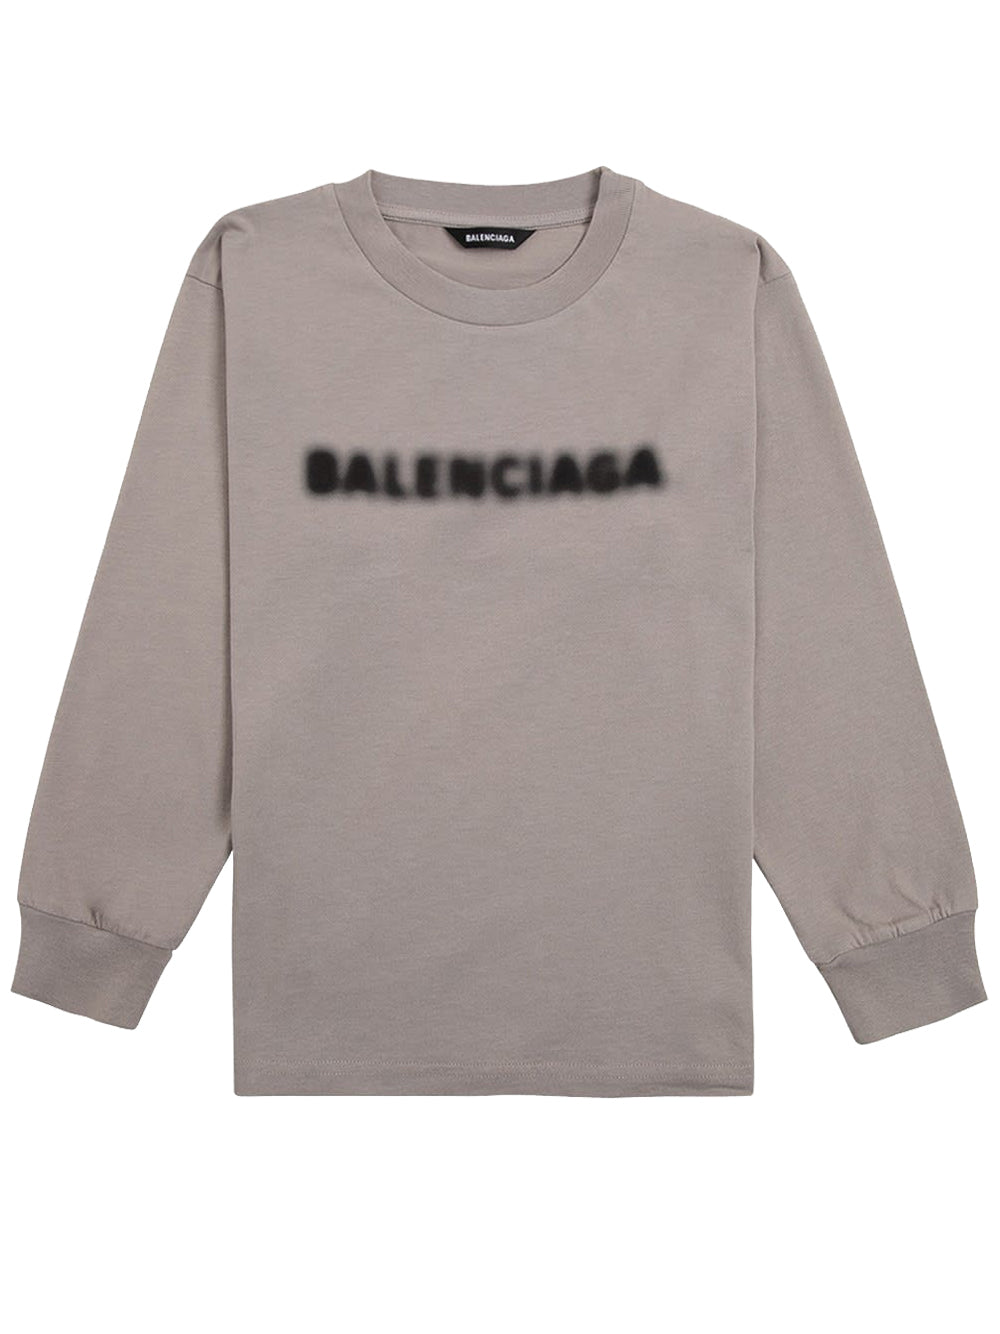 Balenciaga Grey Blurry Distressed T-Shirt Balenciaga